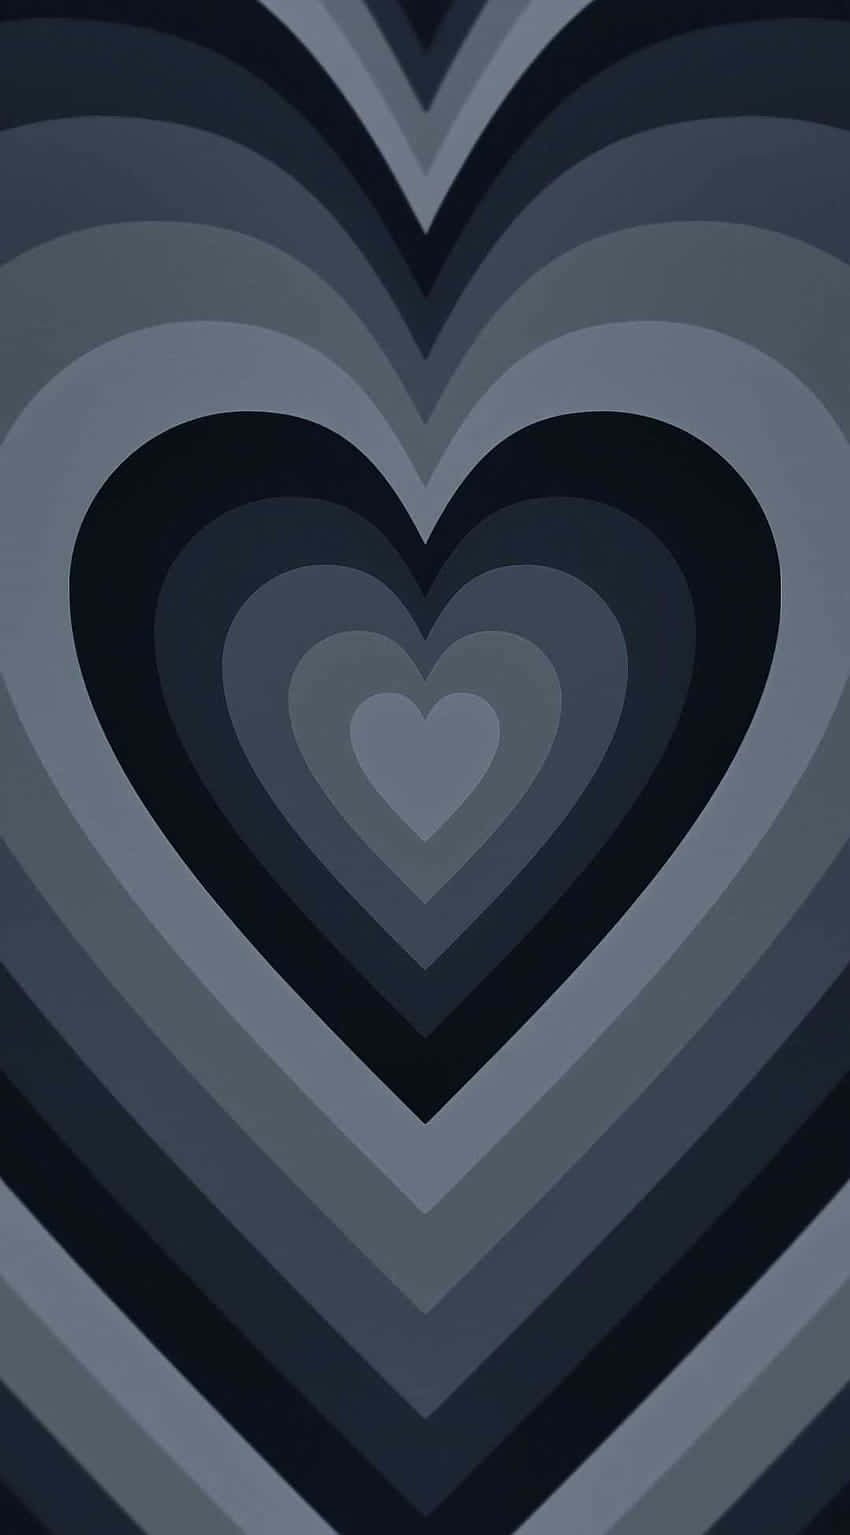 Monochrome Black Heart iPhone Wallpaper